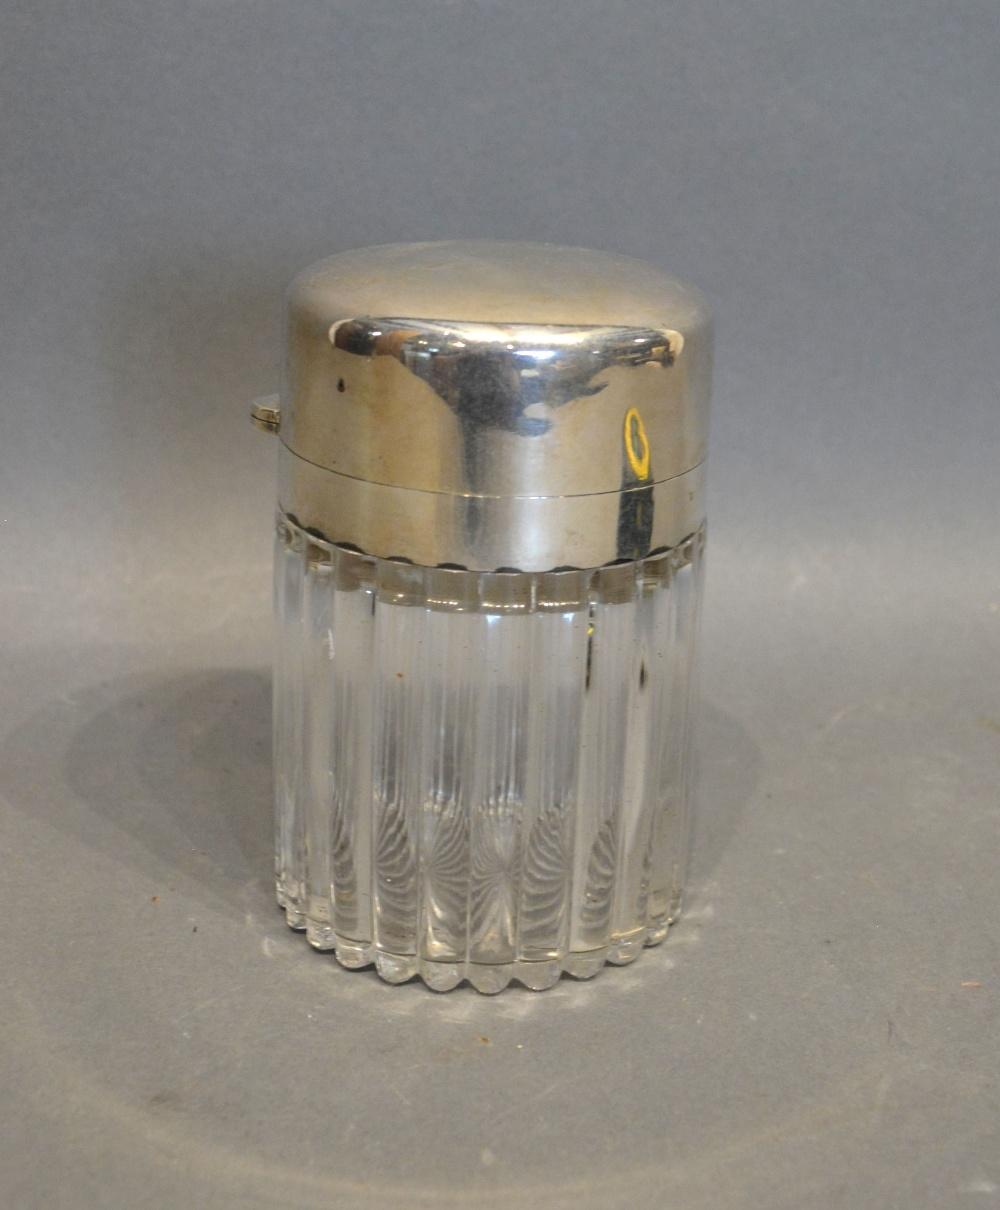 An Edwardian Silver and Cut Glass Large Perfume Bottle by Asprey, London 1900